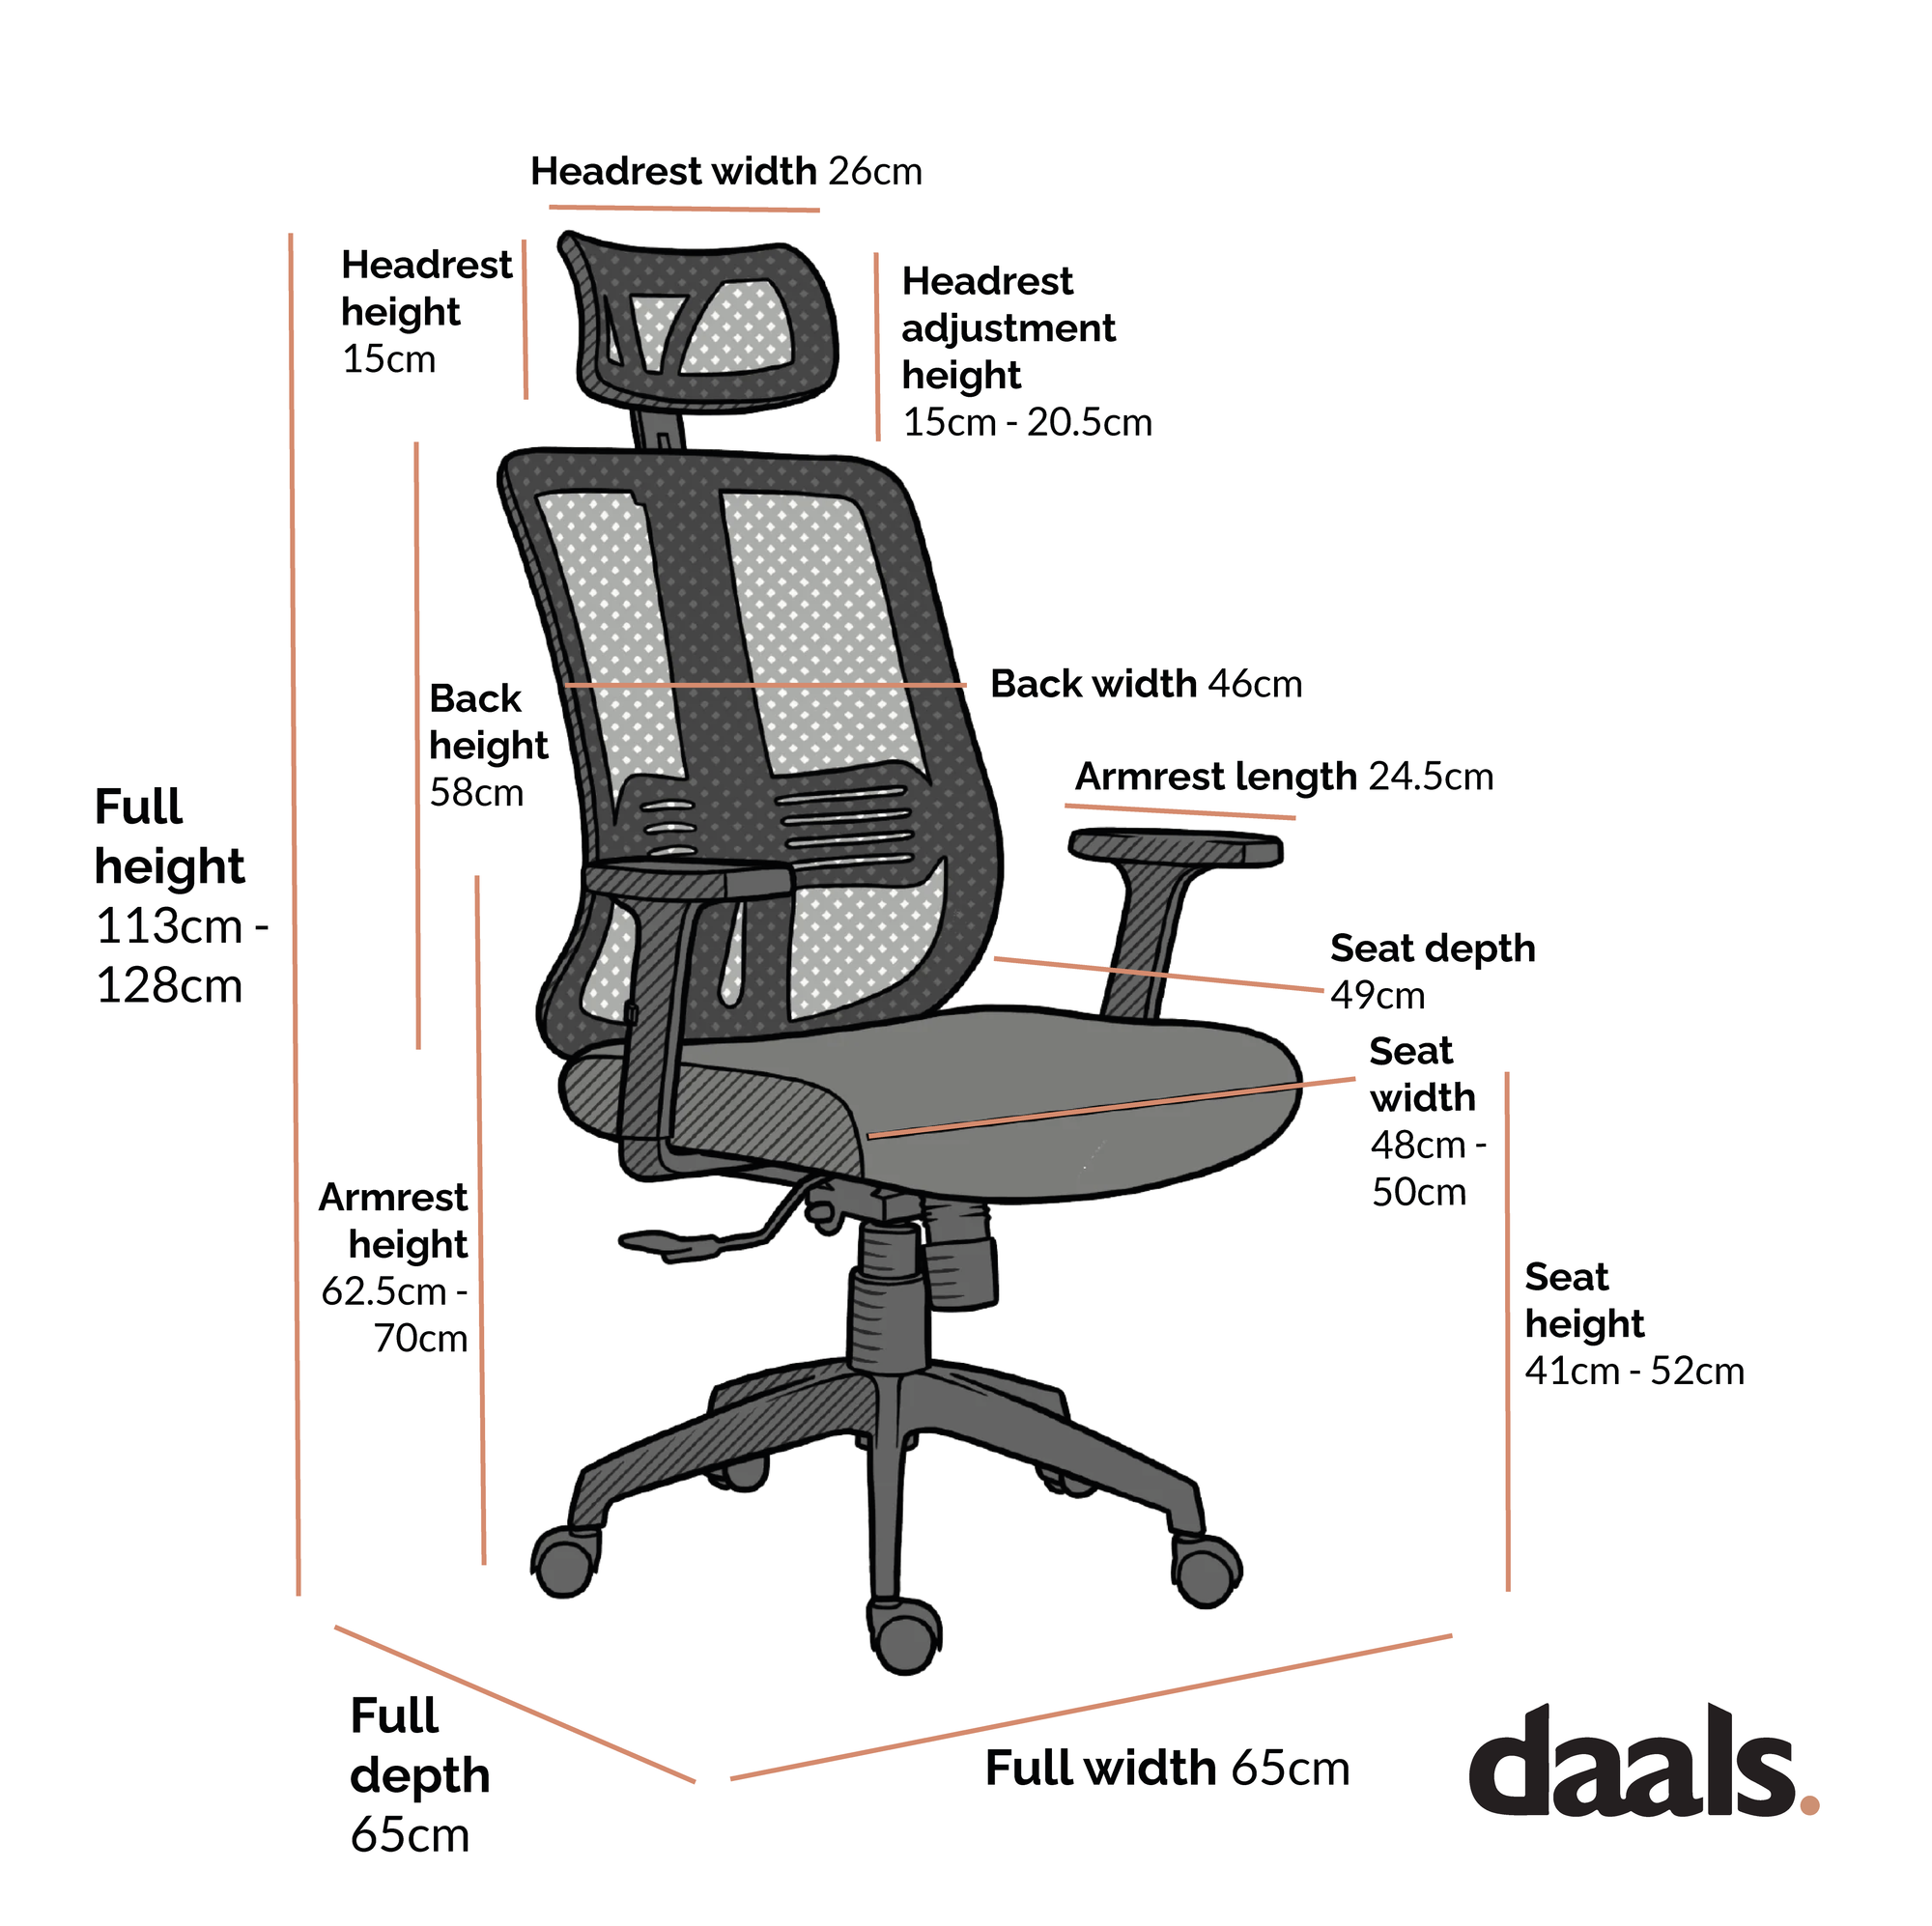 Black Mesh High Back Executive Office Chair Swivel Desk Chair with Synchro-Tilt, Adjustable Armrest & Headrest